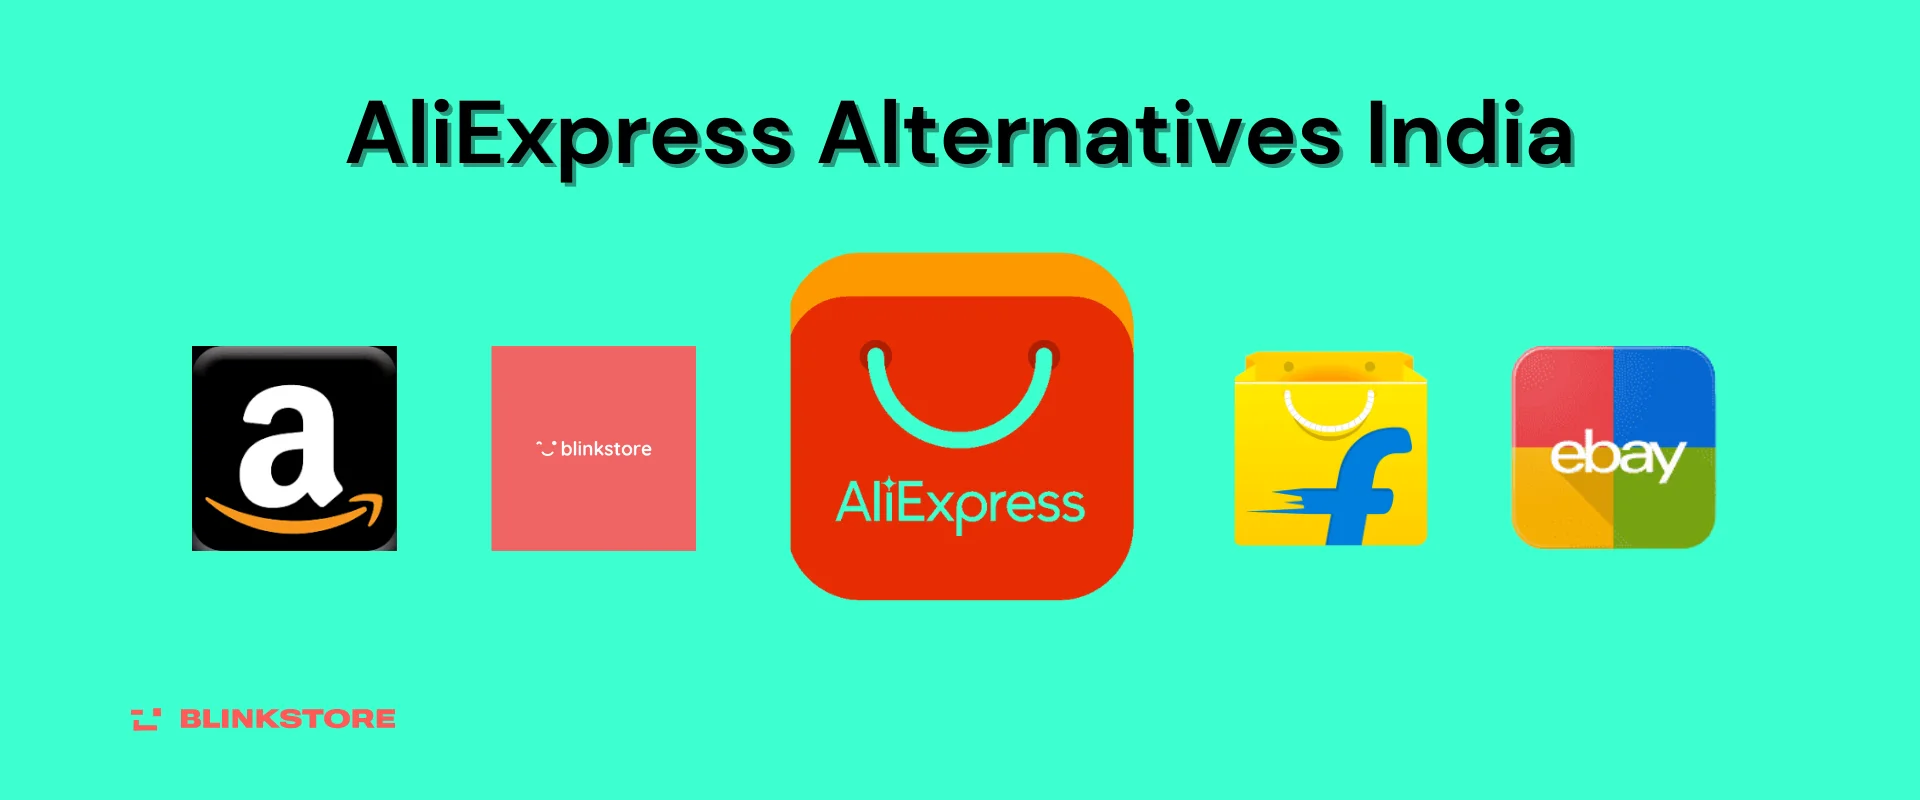 AliExpress Alternatives India